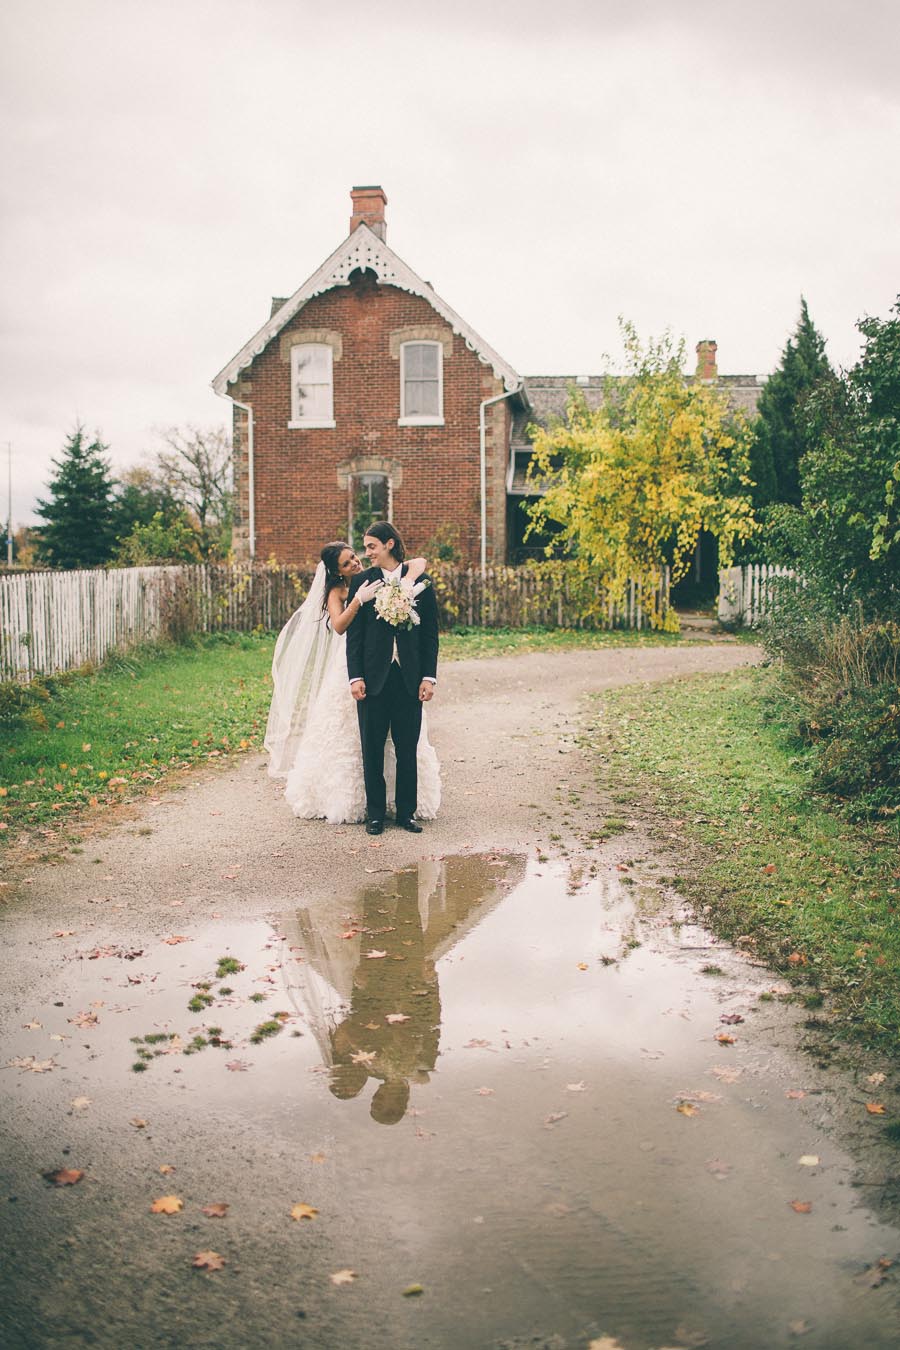 The Old Britannia Schoolhouse Wedding Pictures by Toronto Wedding Photography Studio